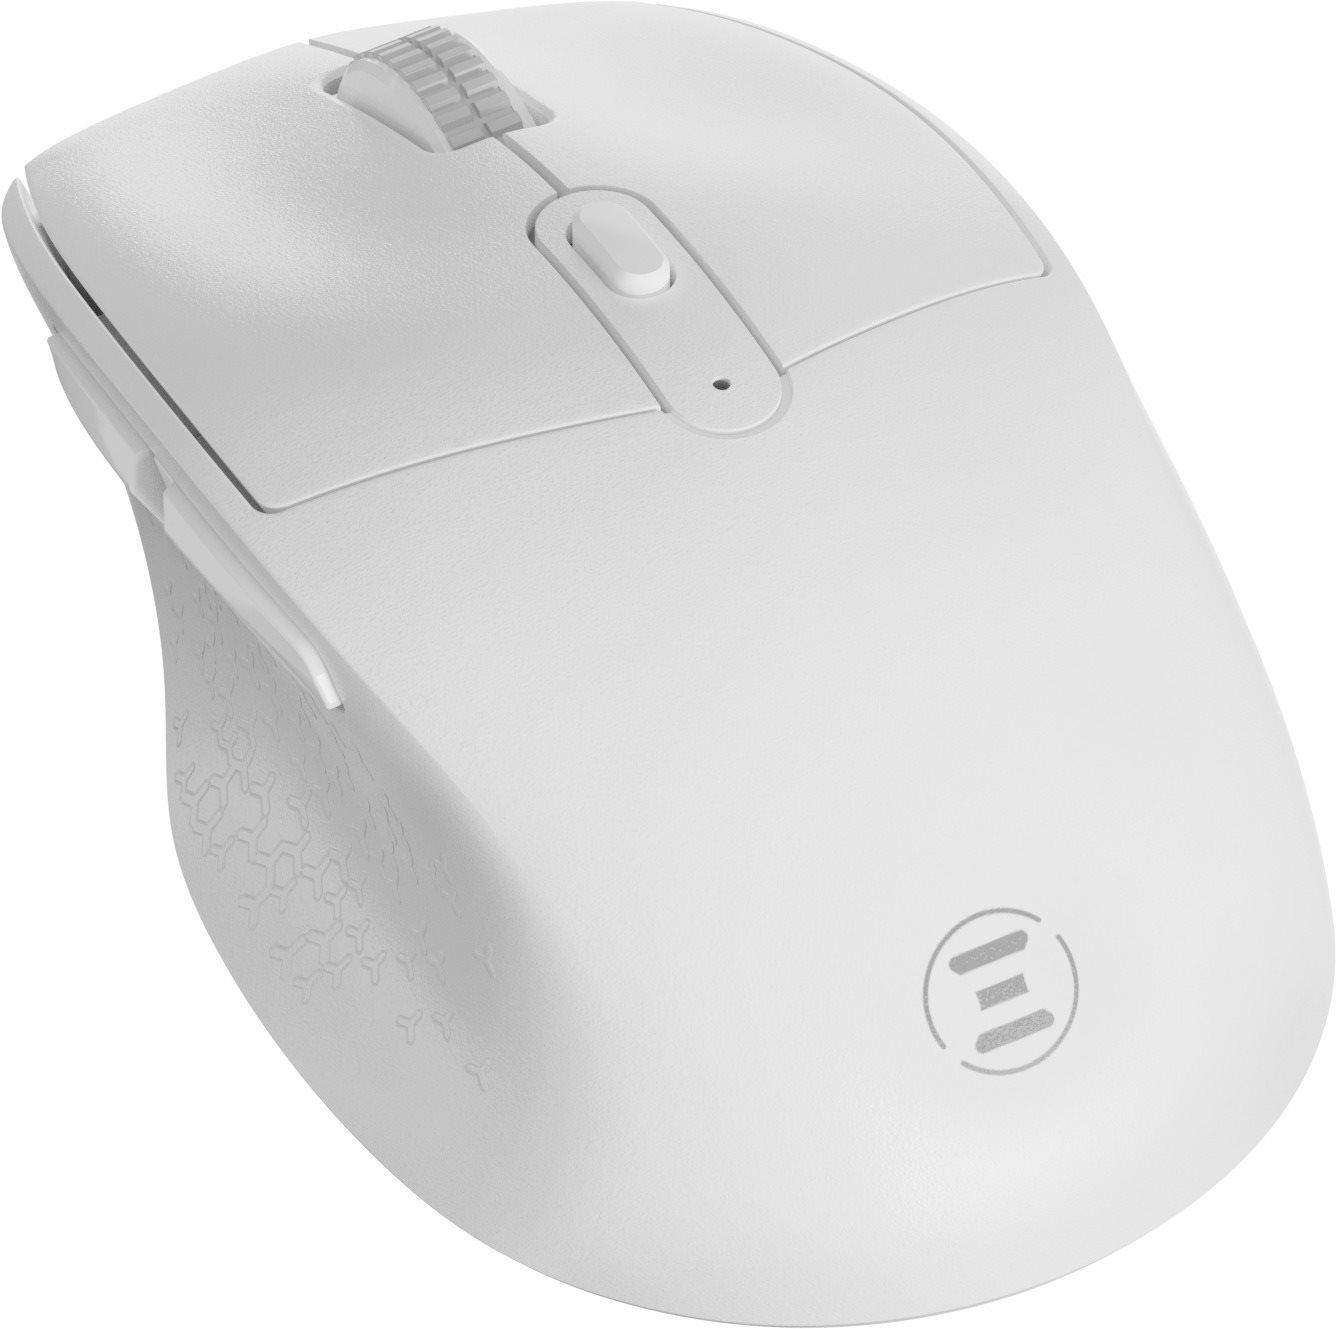 Eternico Wireless 2.4 GHz & Double Bluetooth Mouse MSB500 fehér